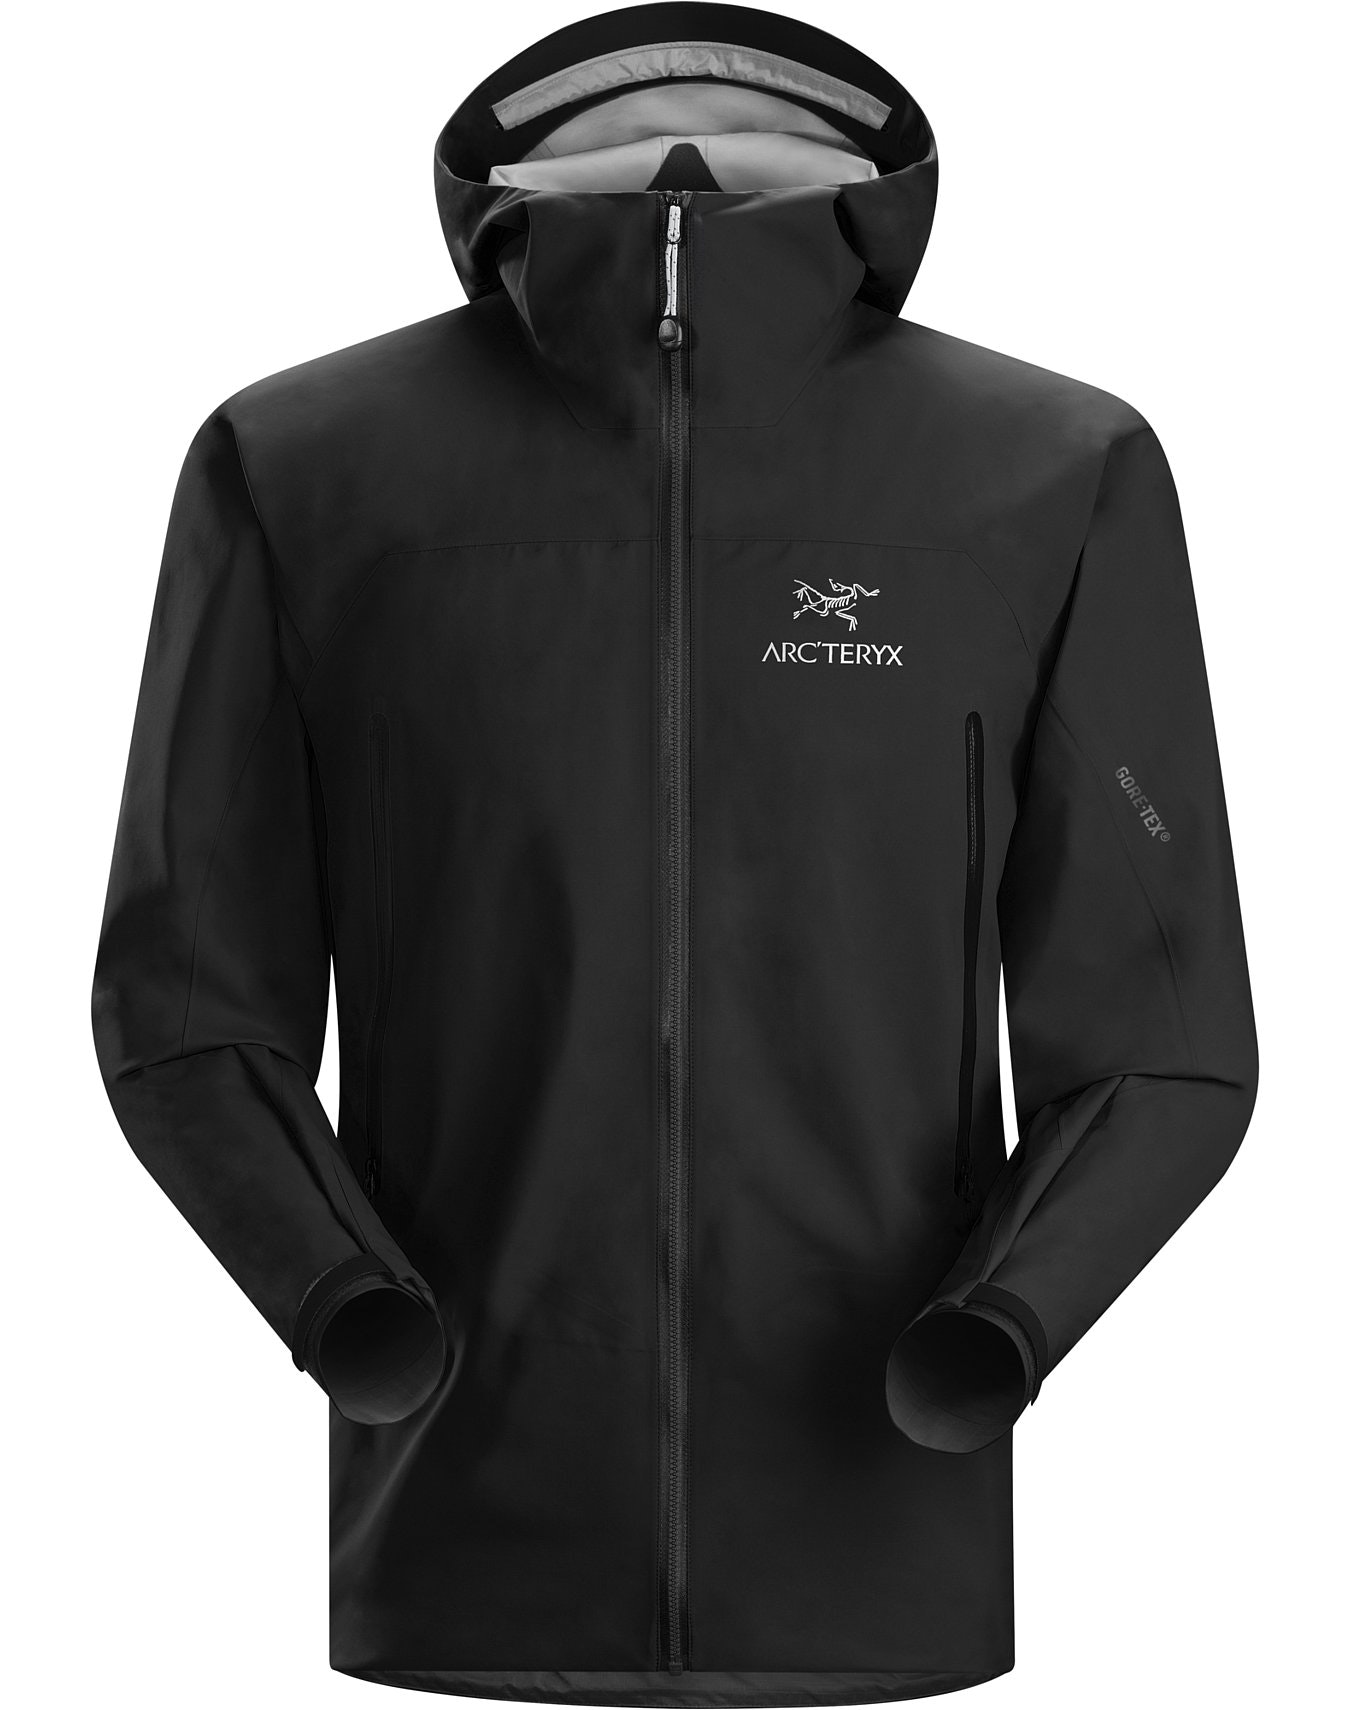 Zeta AR Jacket, men's, discontinued Spring 2019 colors